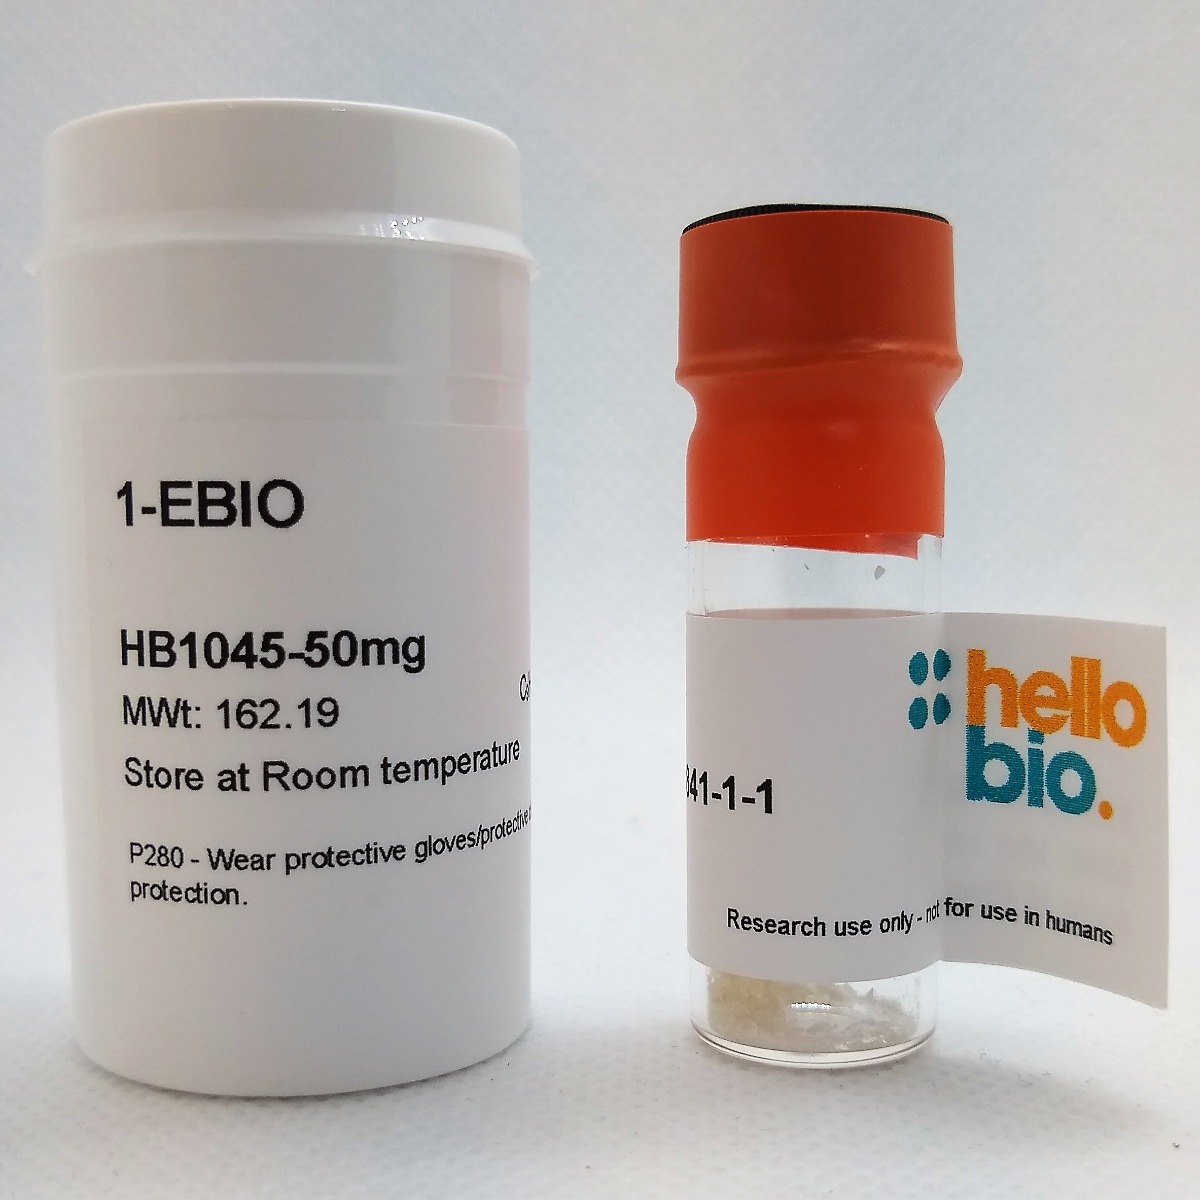 1-EBIO product vial image | Hello Bio